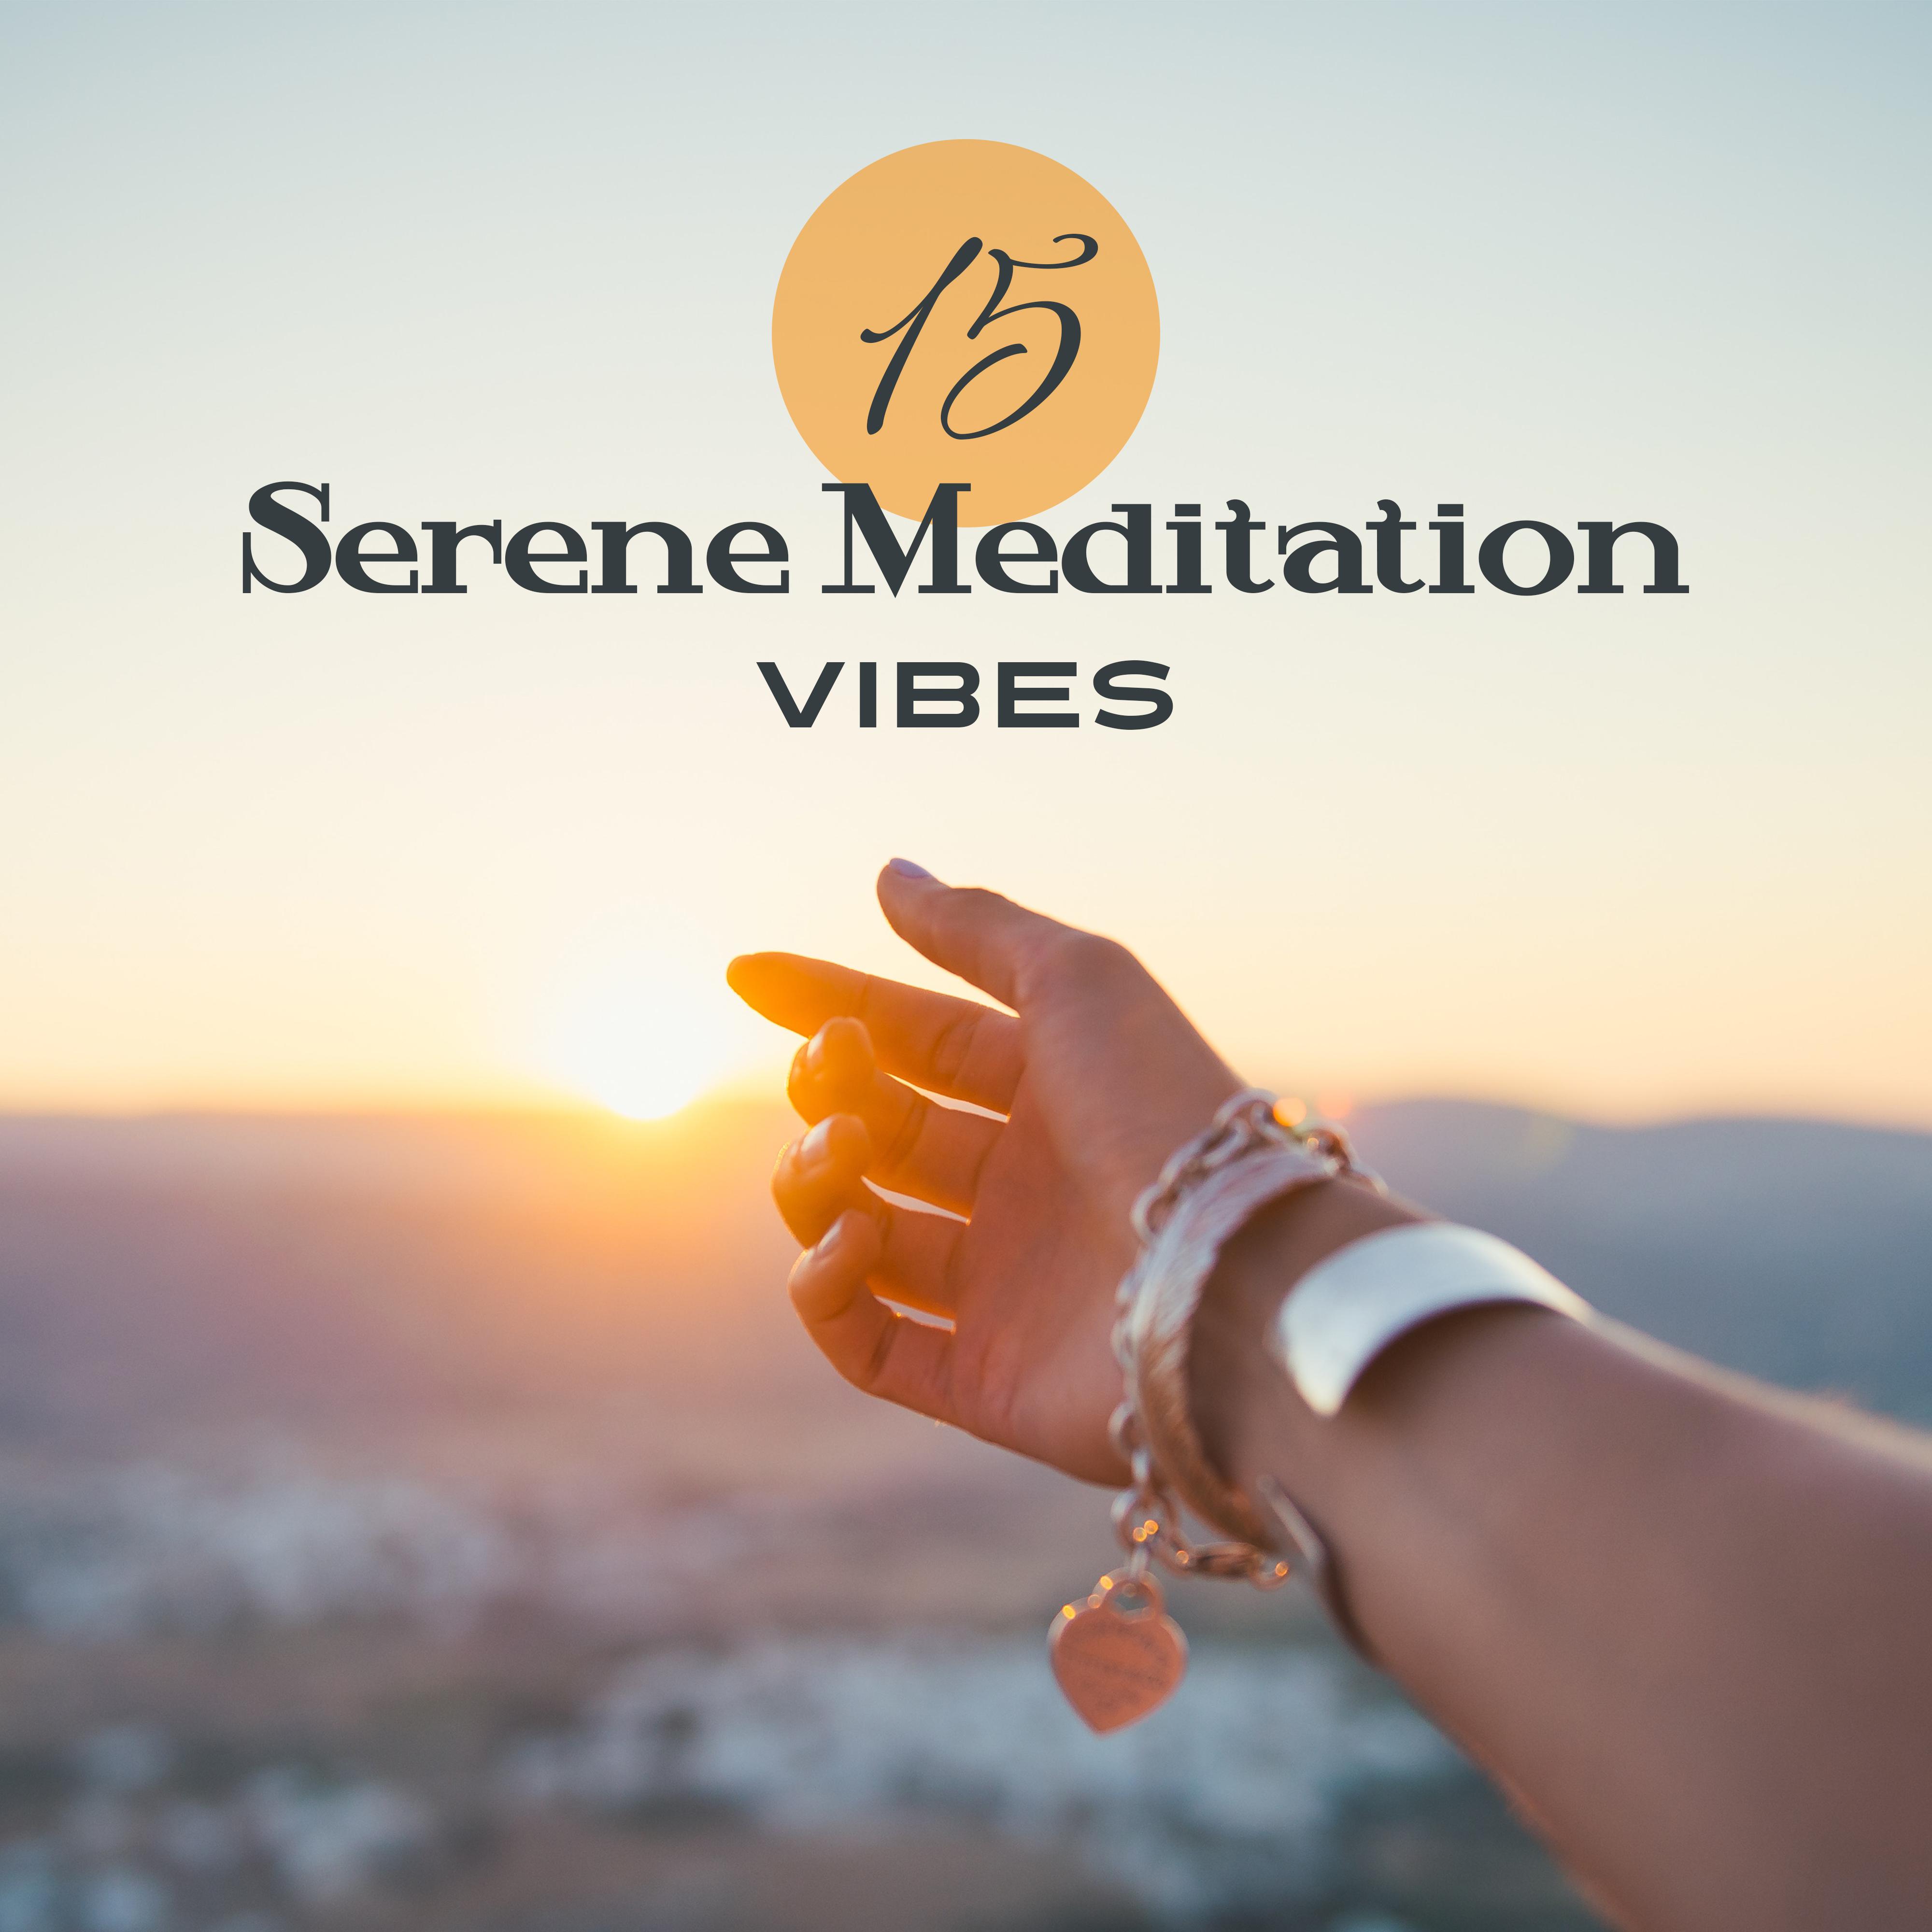 15 Serene Meditation Vibes